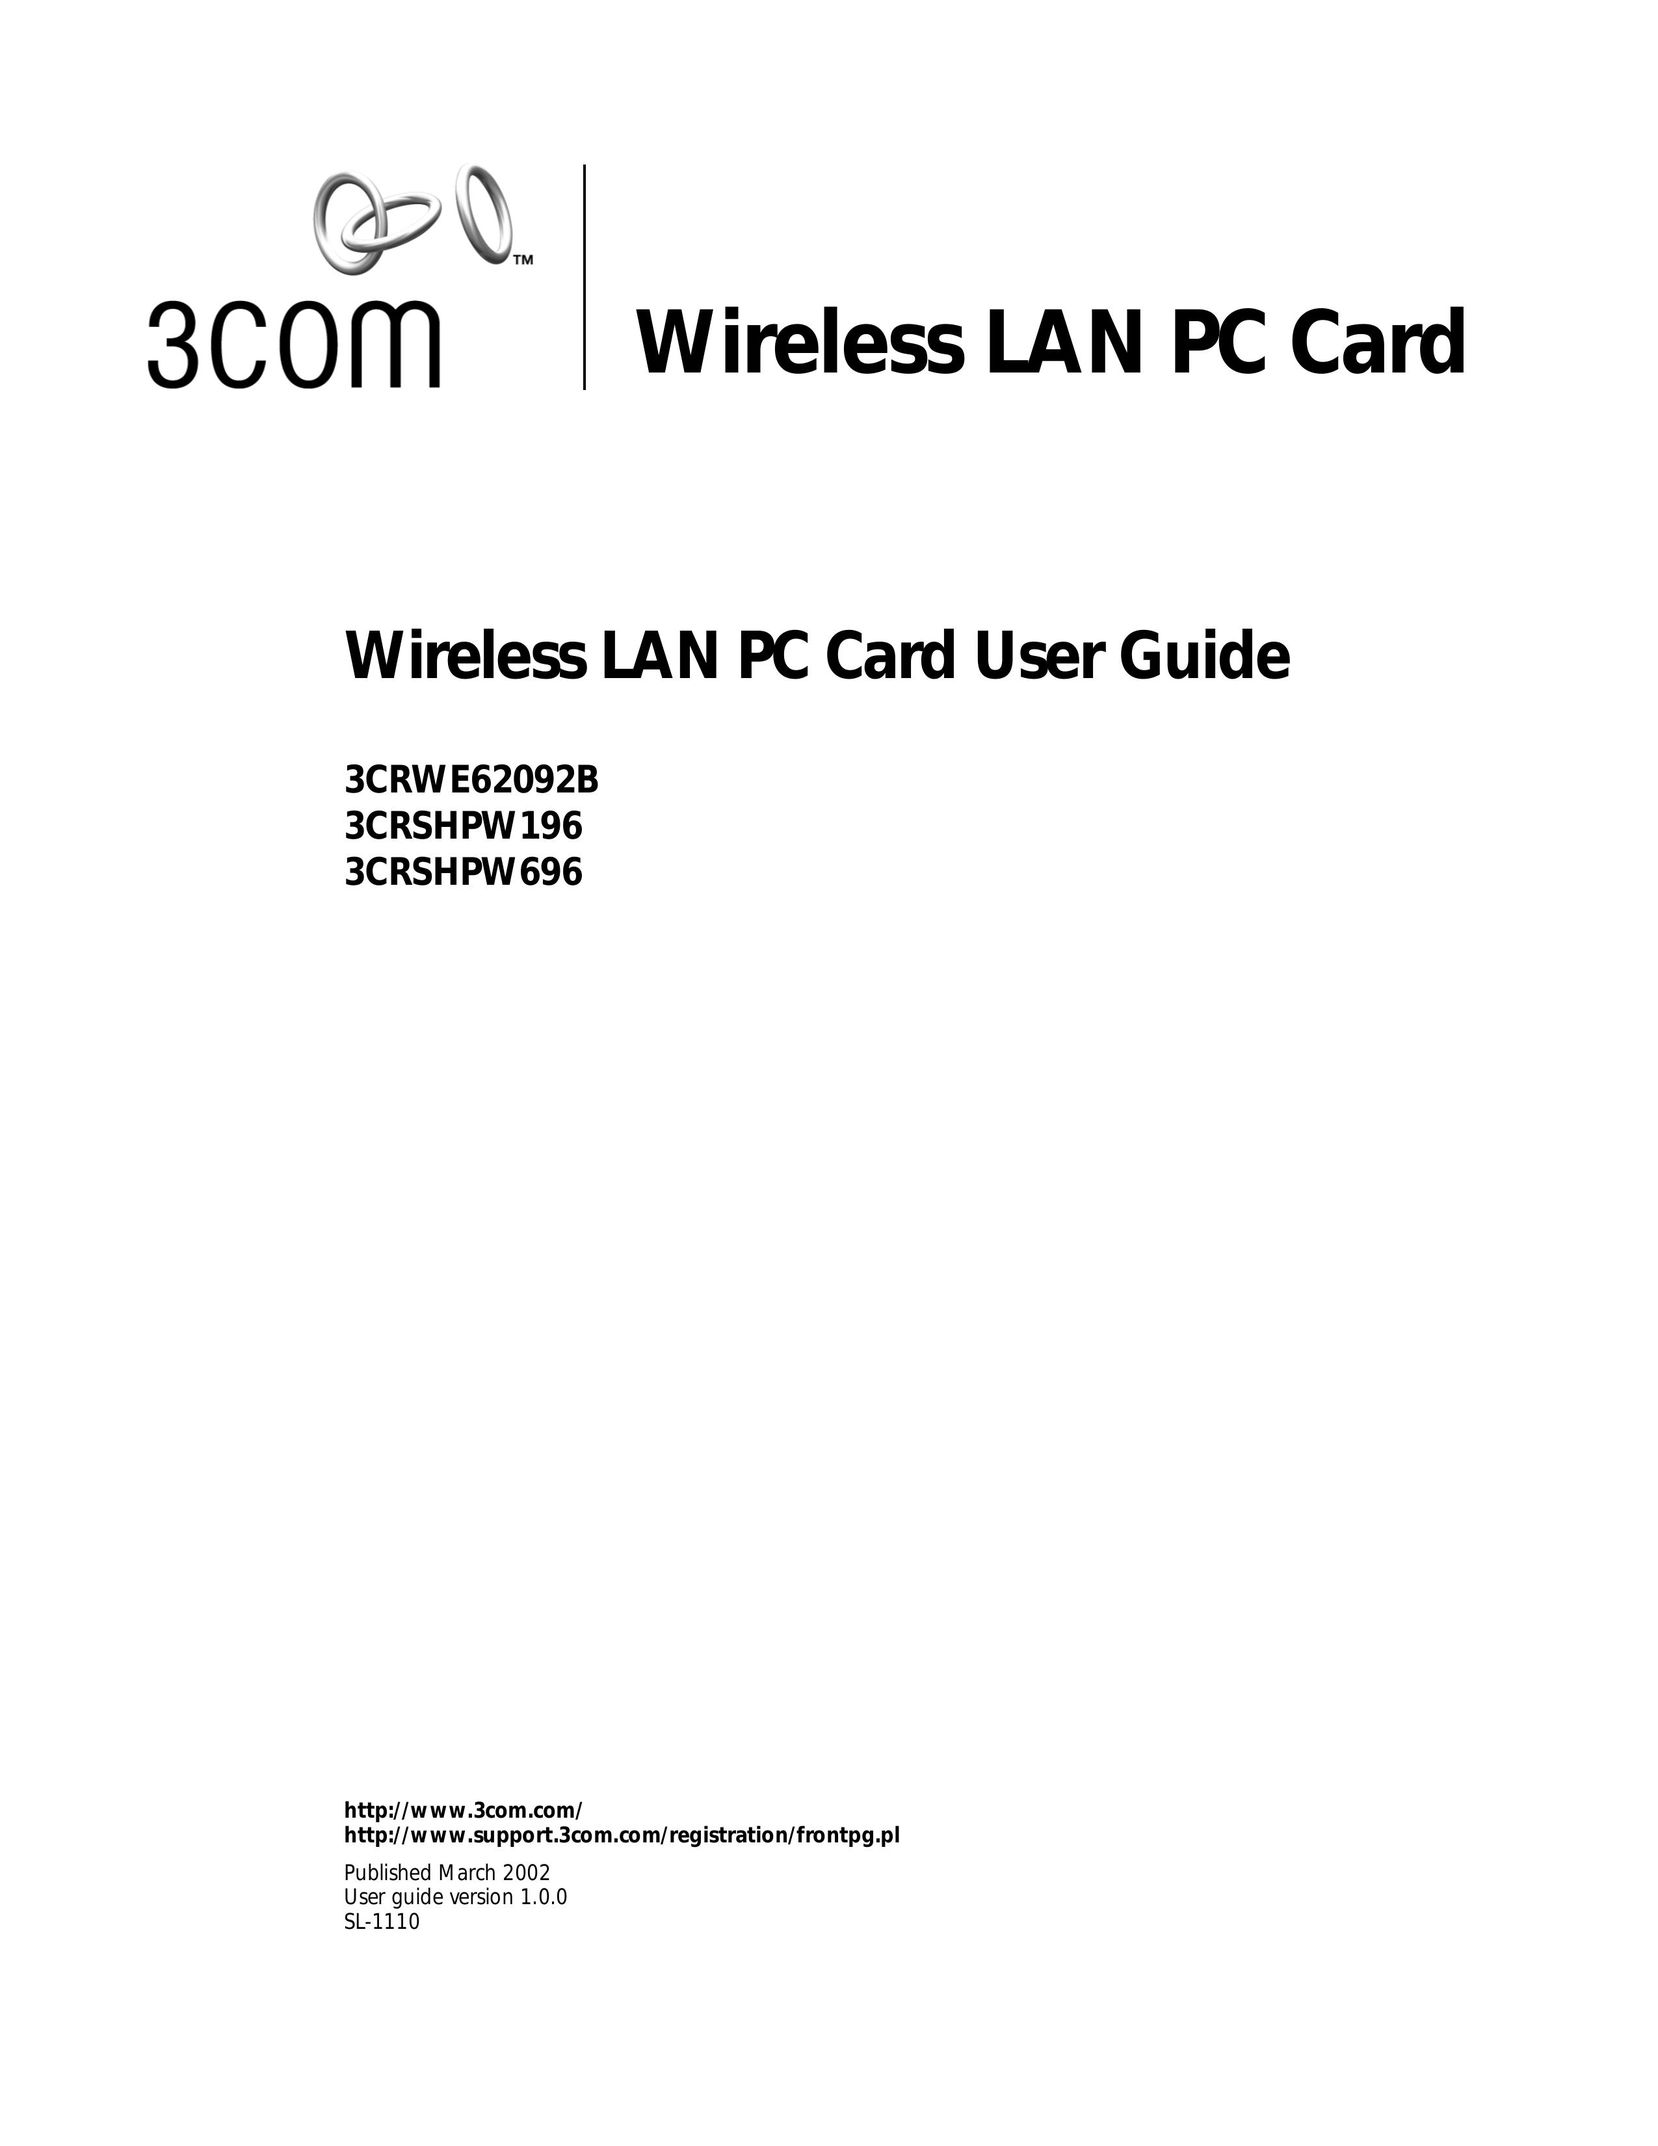 3Com 3CRSHPW696 Network Card User Manual